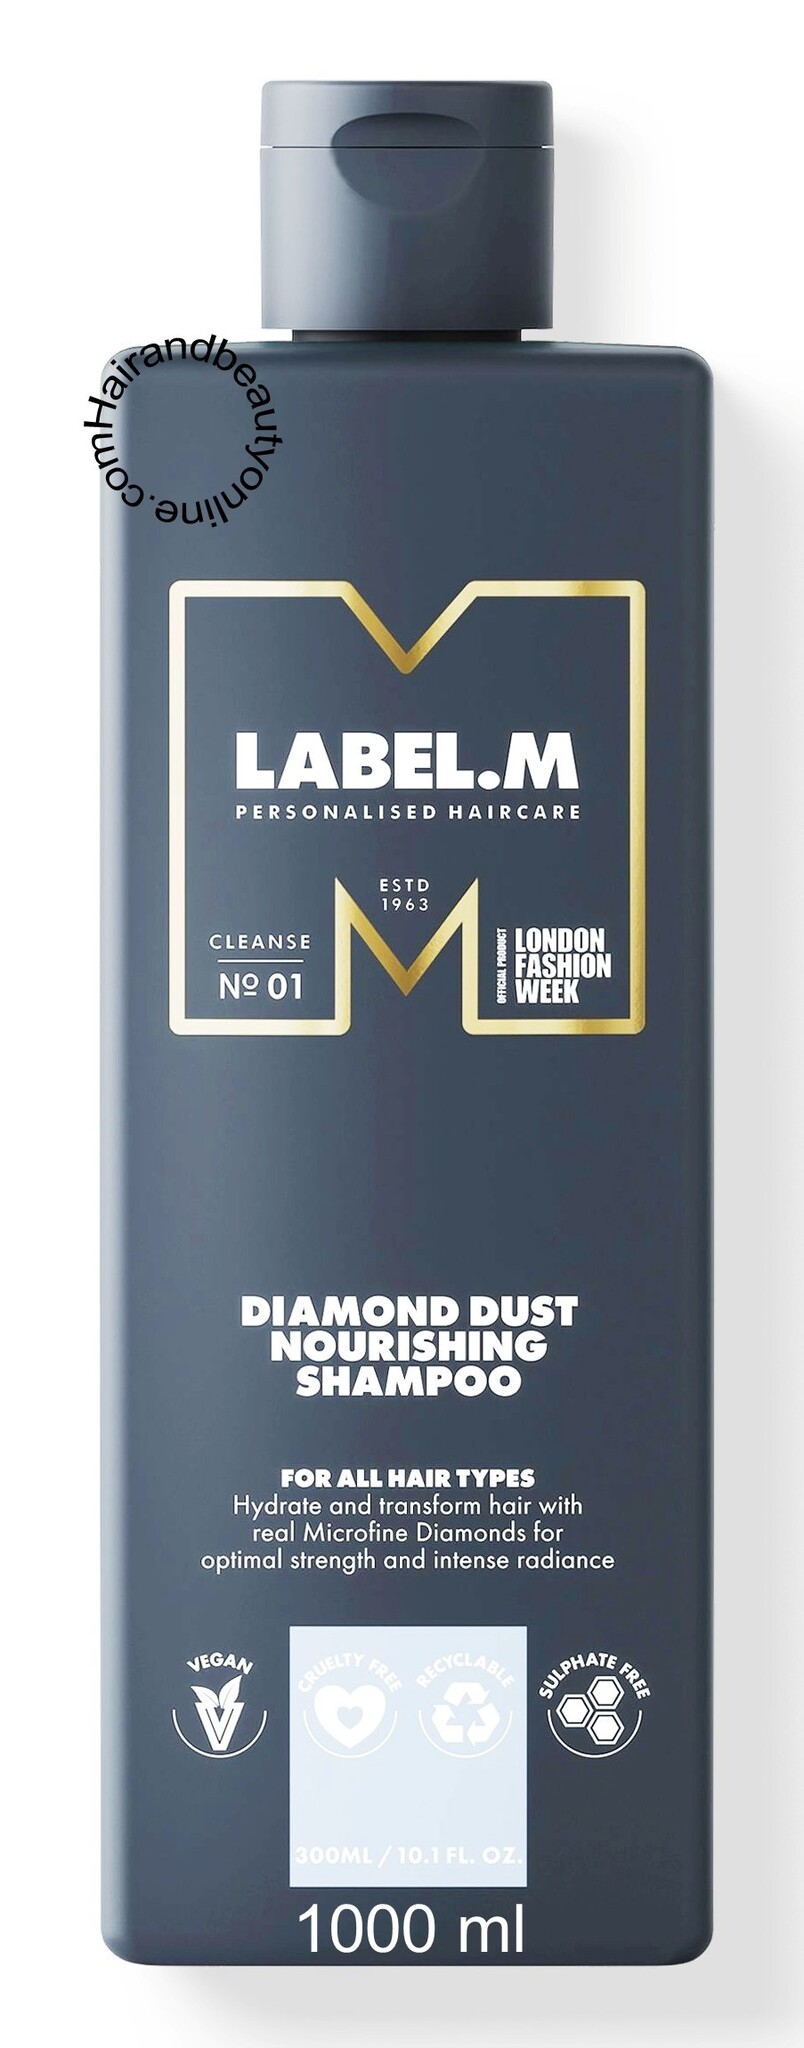 Label.m Diamond Dust Nourishing Shampoo 1000ml